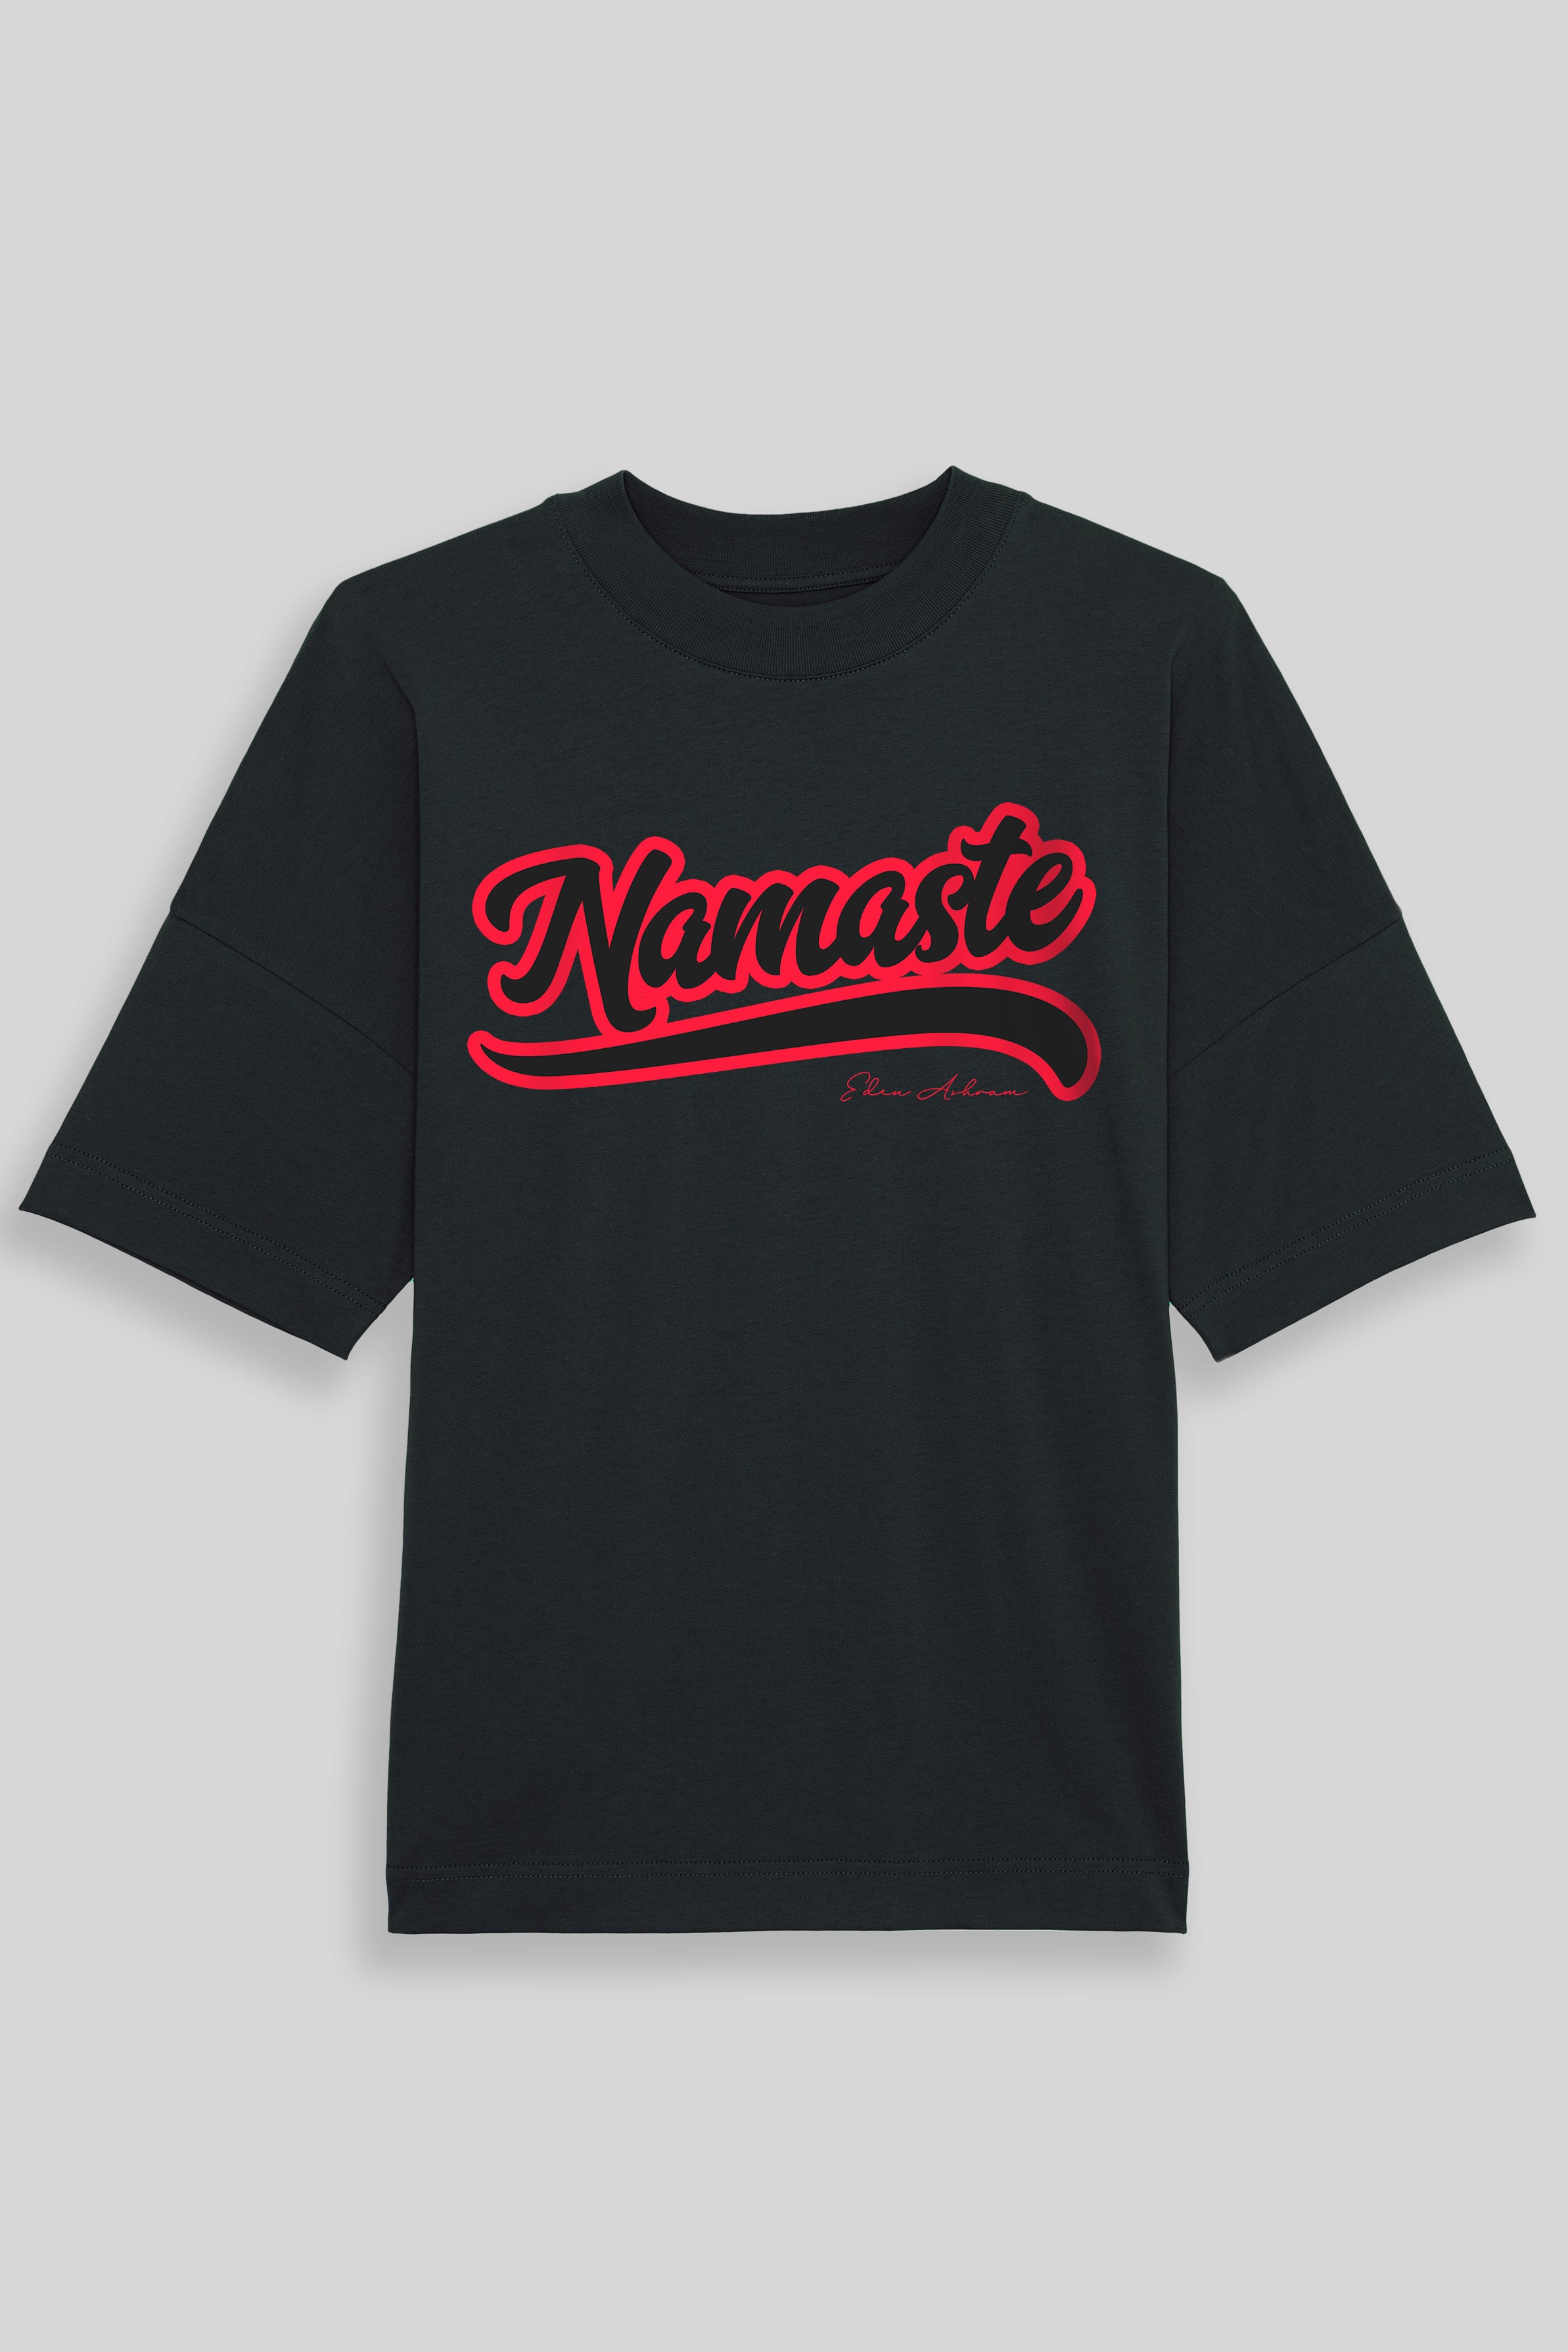 EDEN ASHRAM Namaste Oversized Organic Dropped Shoulder T-Shirt Black